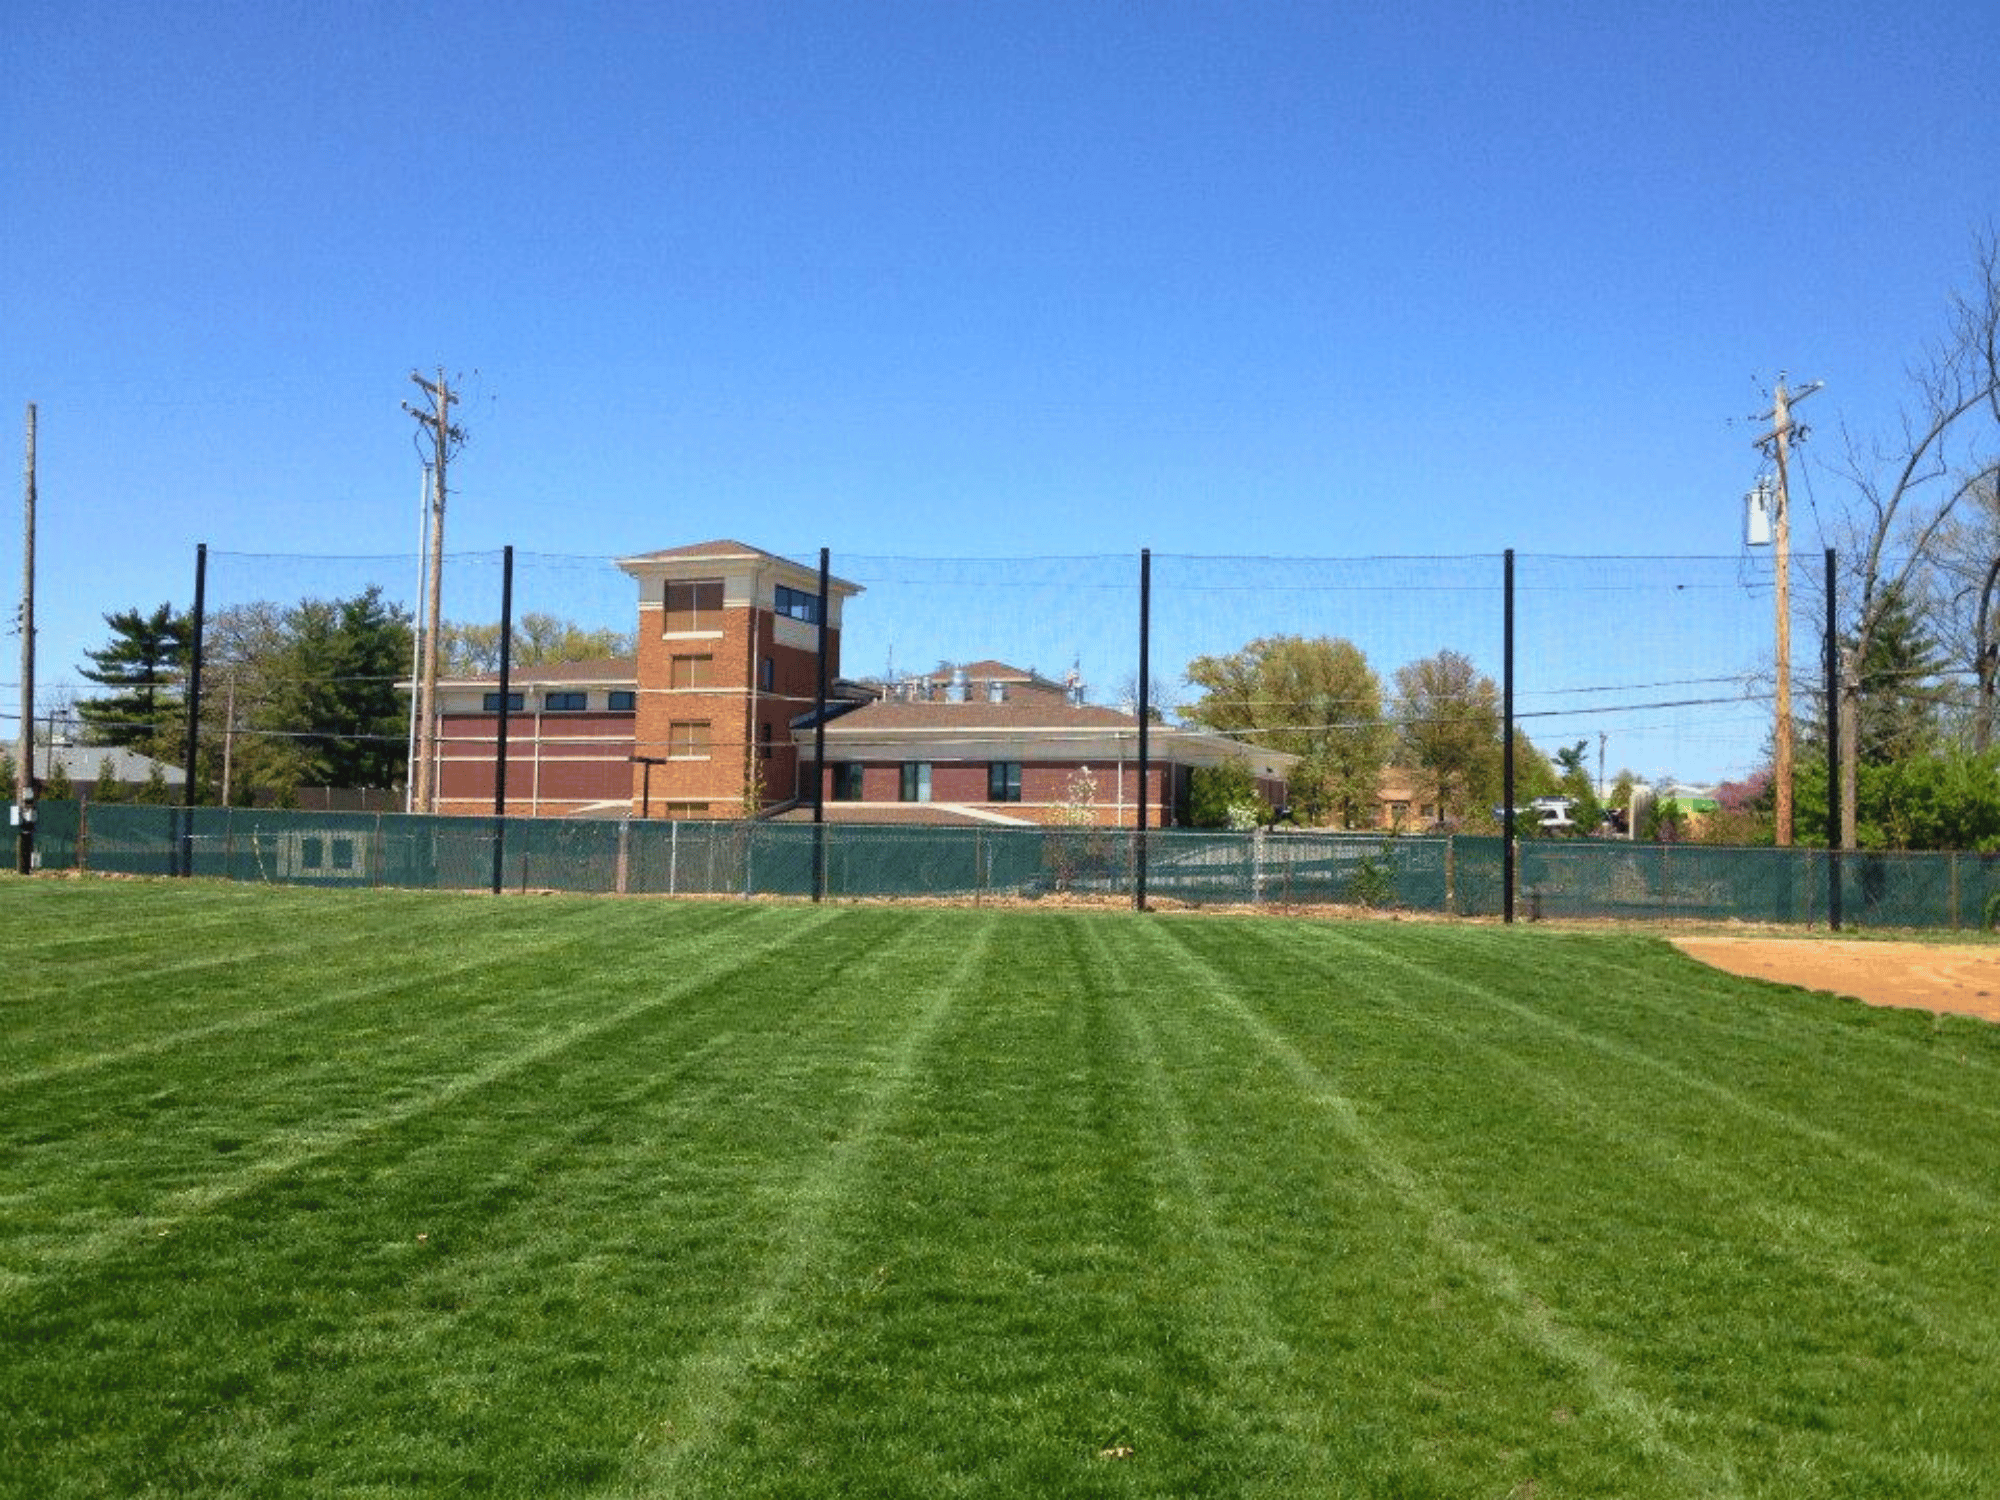 Barrier Netting on Baseball field